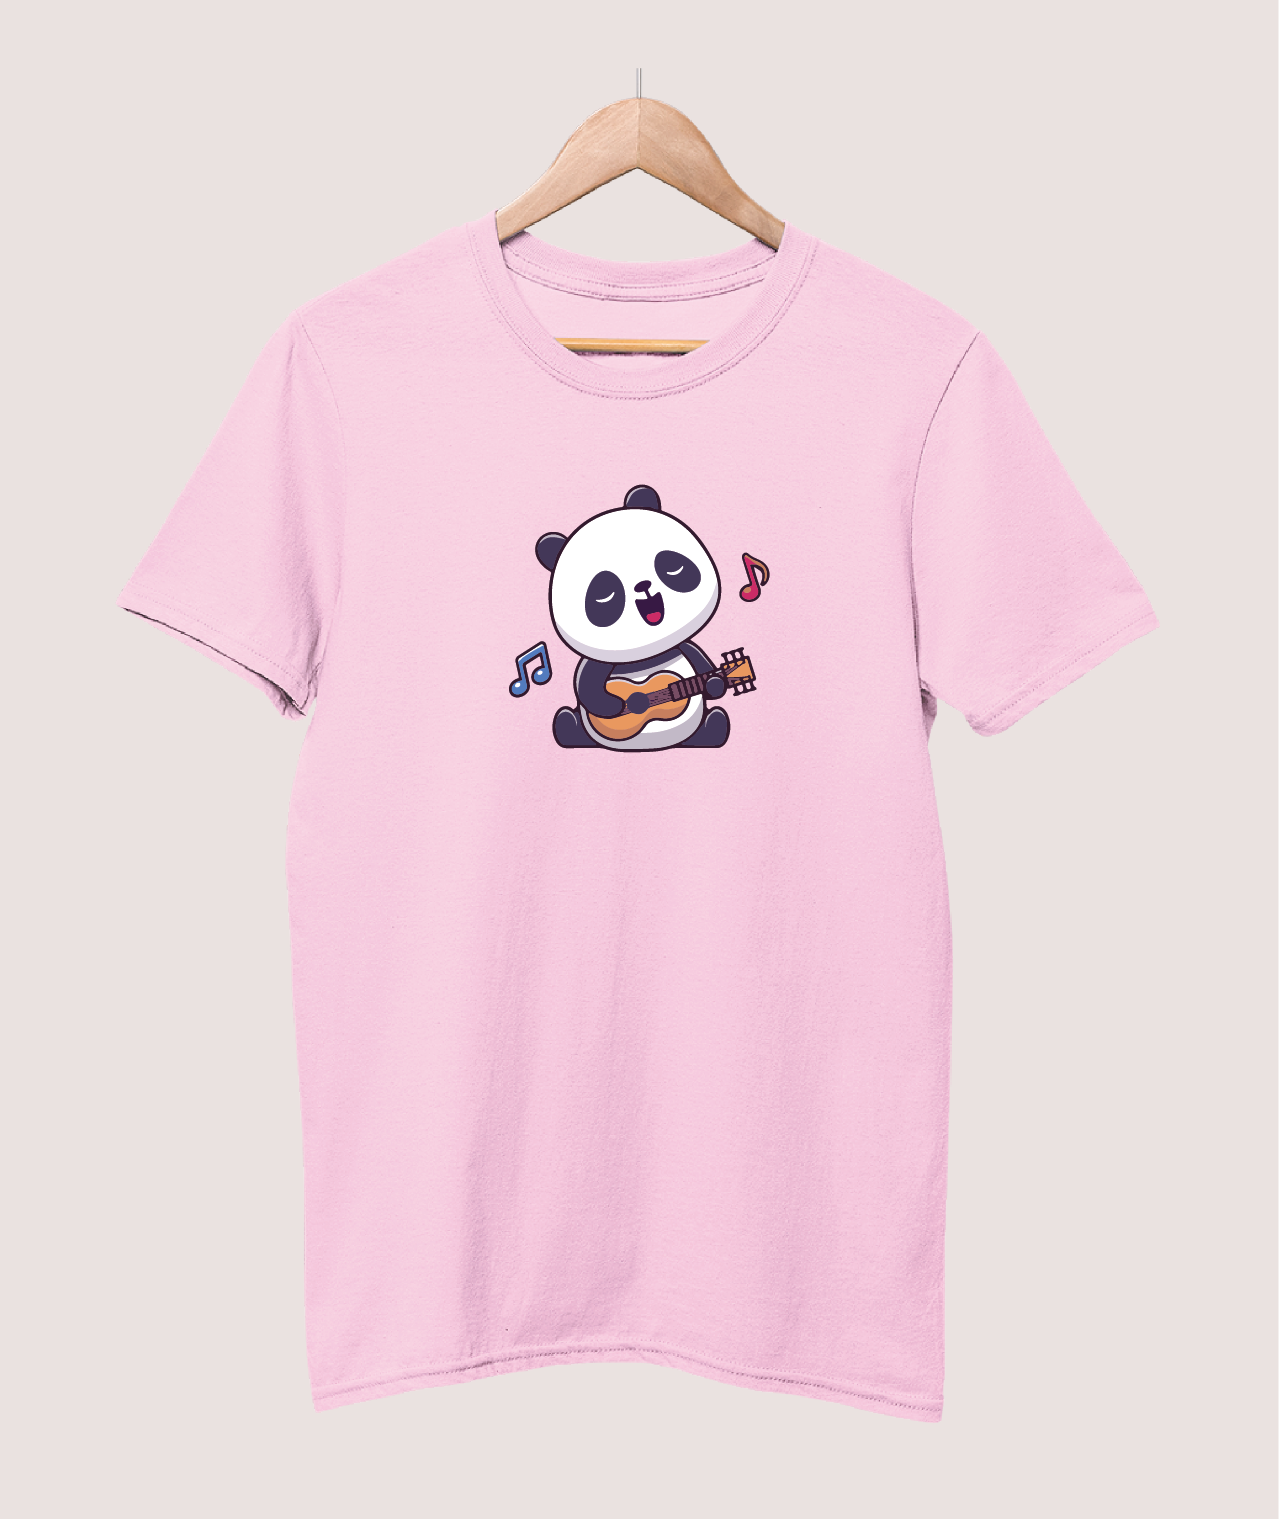 Guitar Panda T-shirt